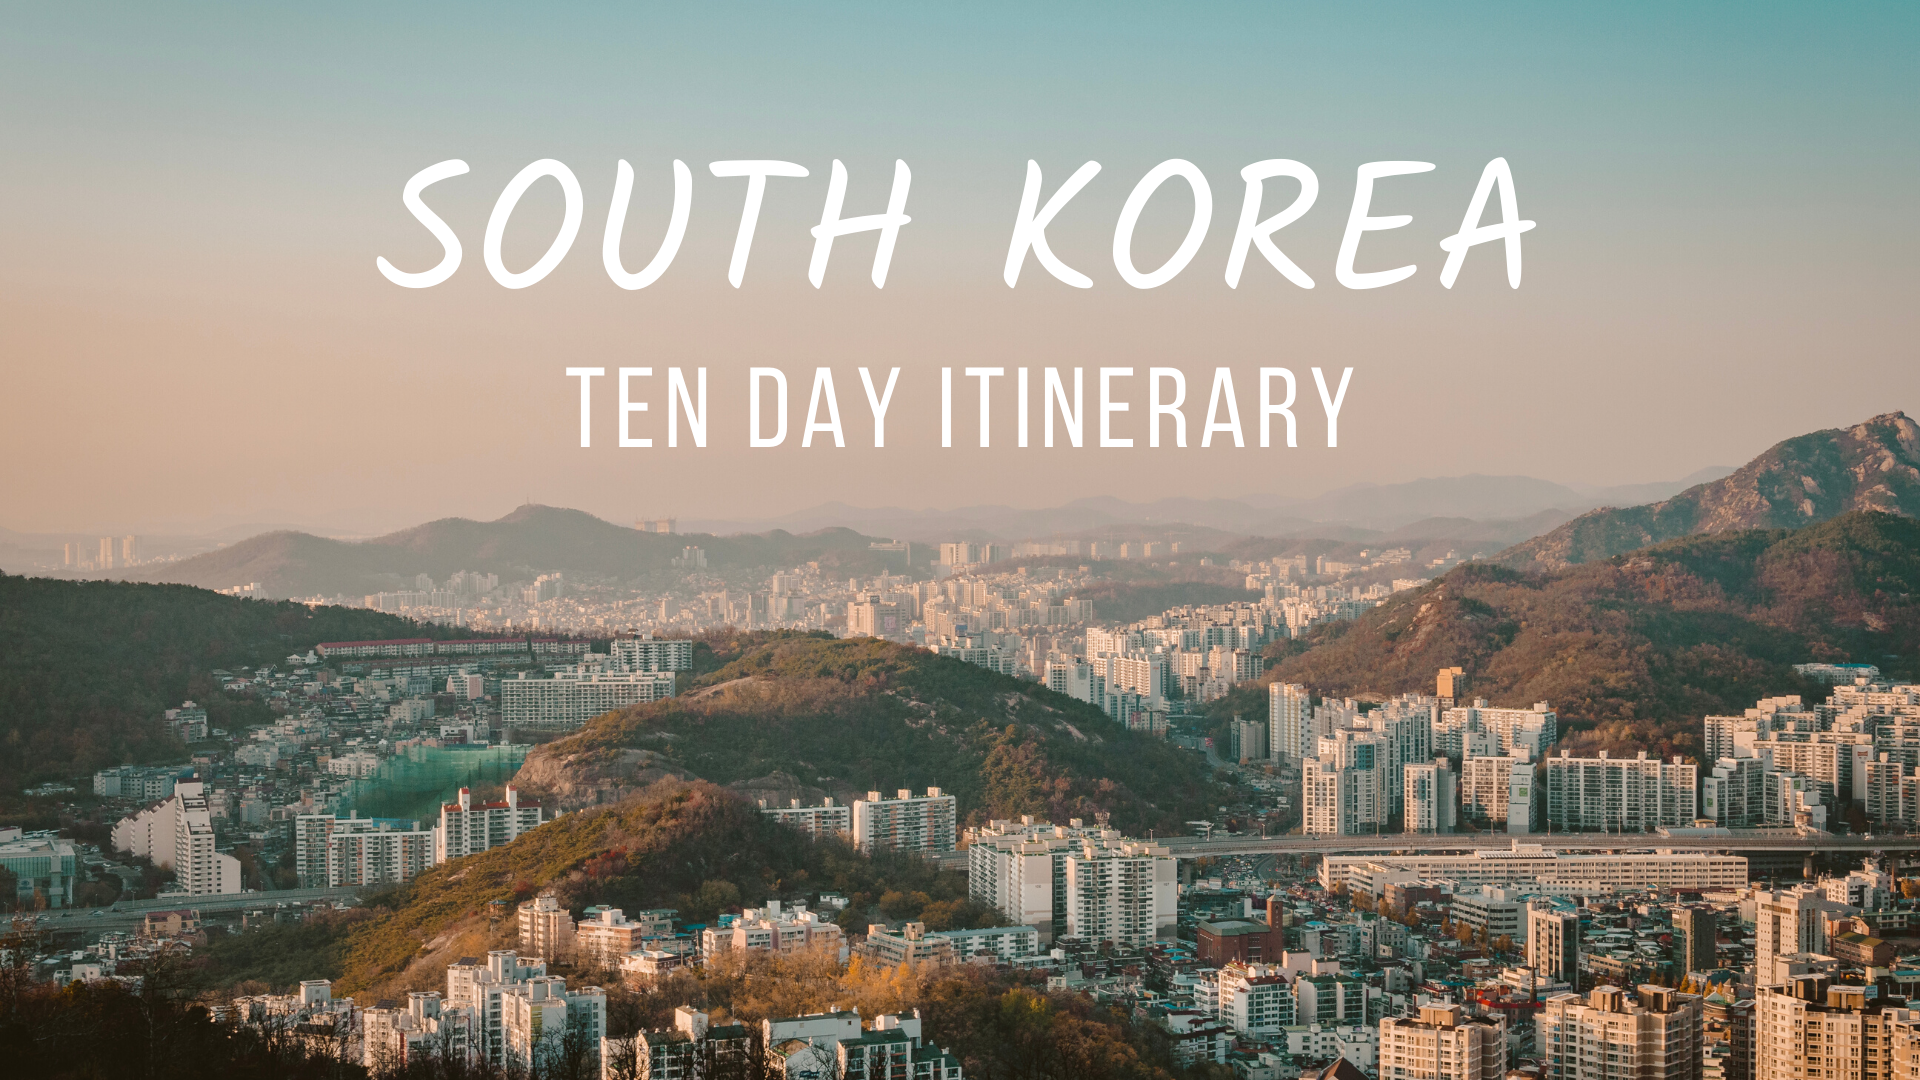 Korea itinerary 10 days, South korea 10 day itinerary. Seoul to Jeonju to Jeju Island to Busan itinerary